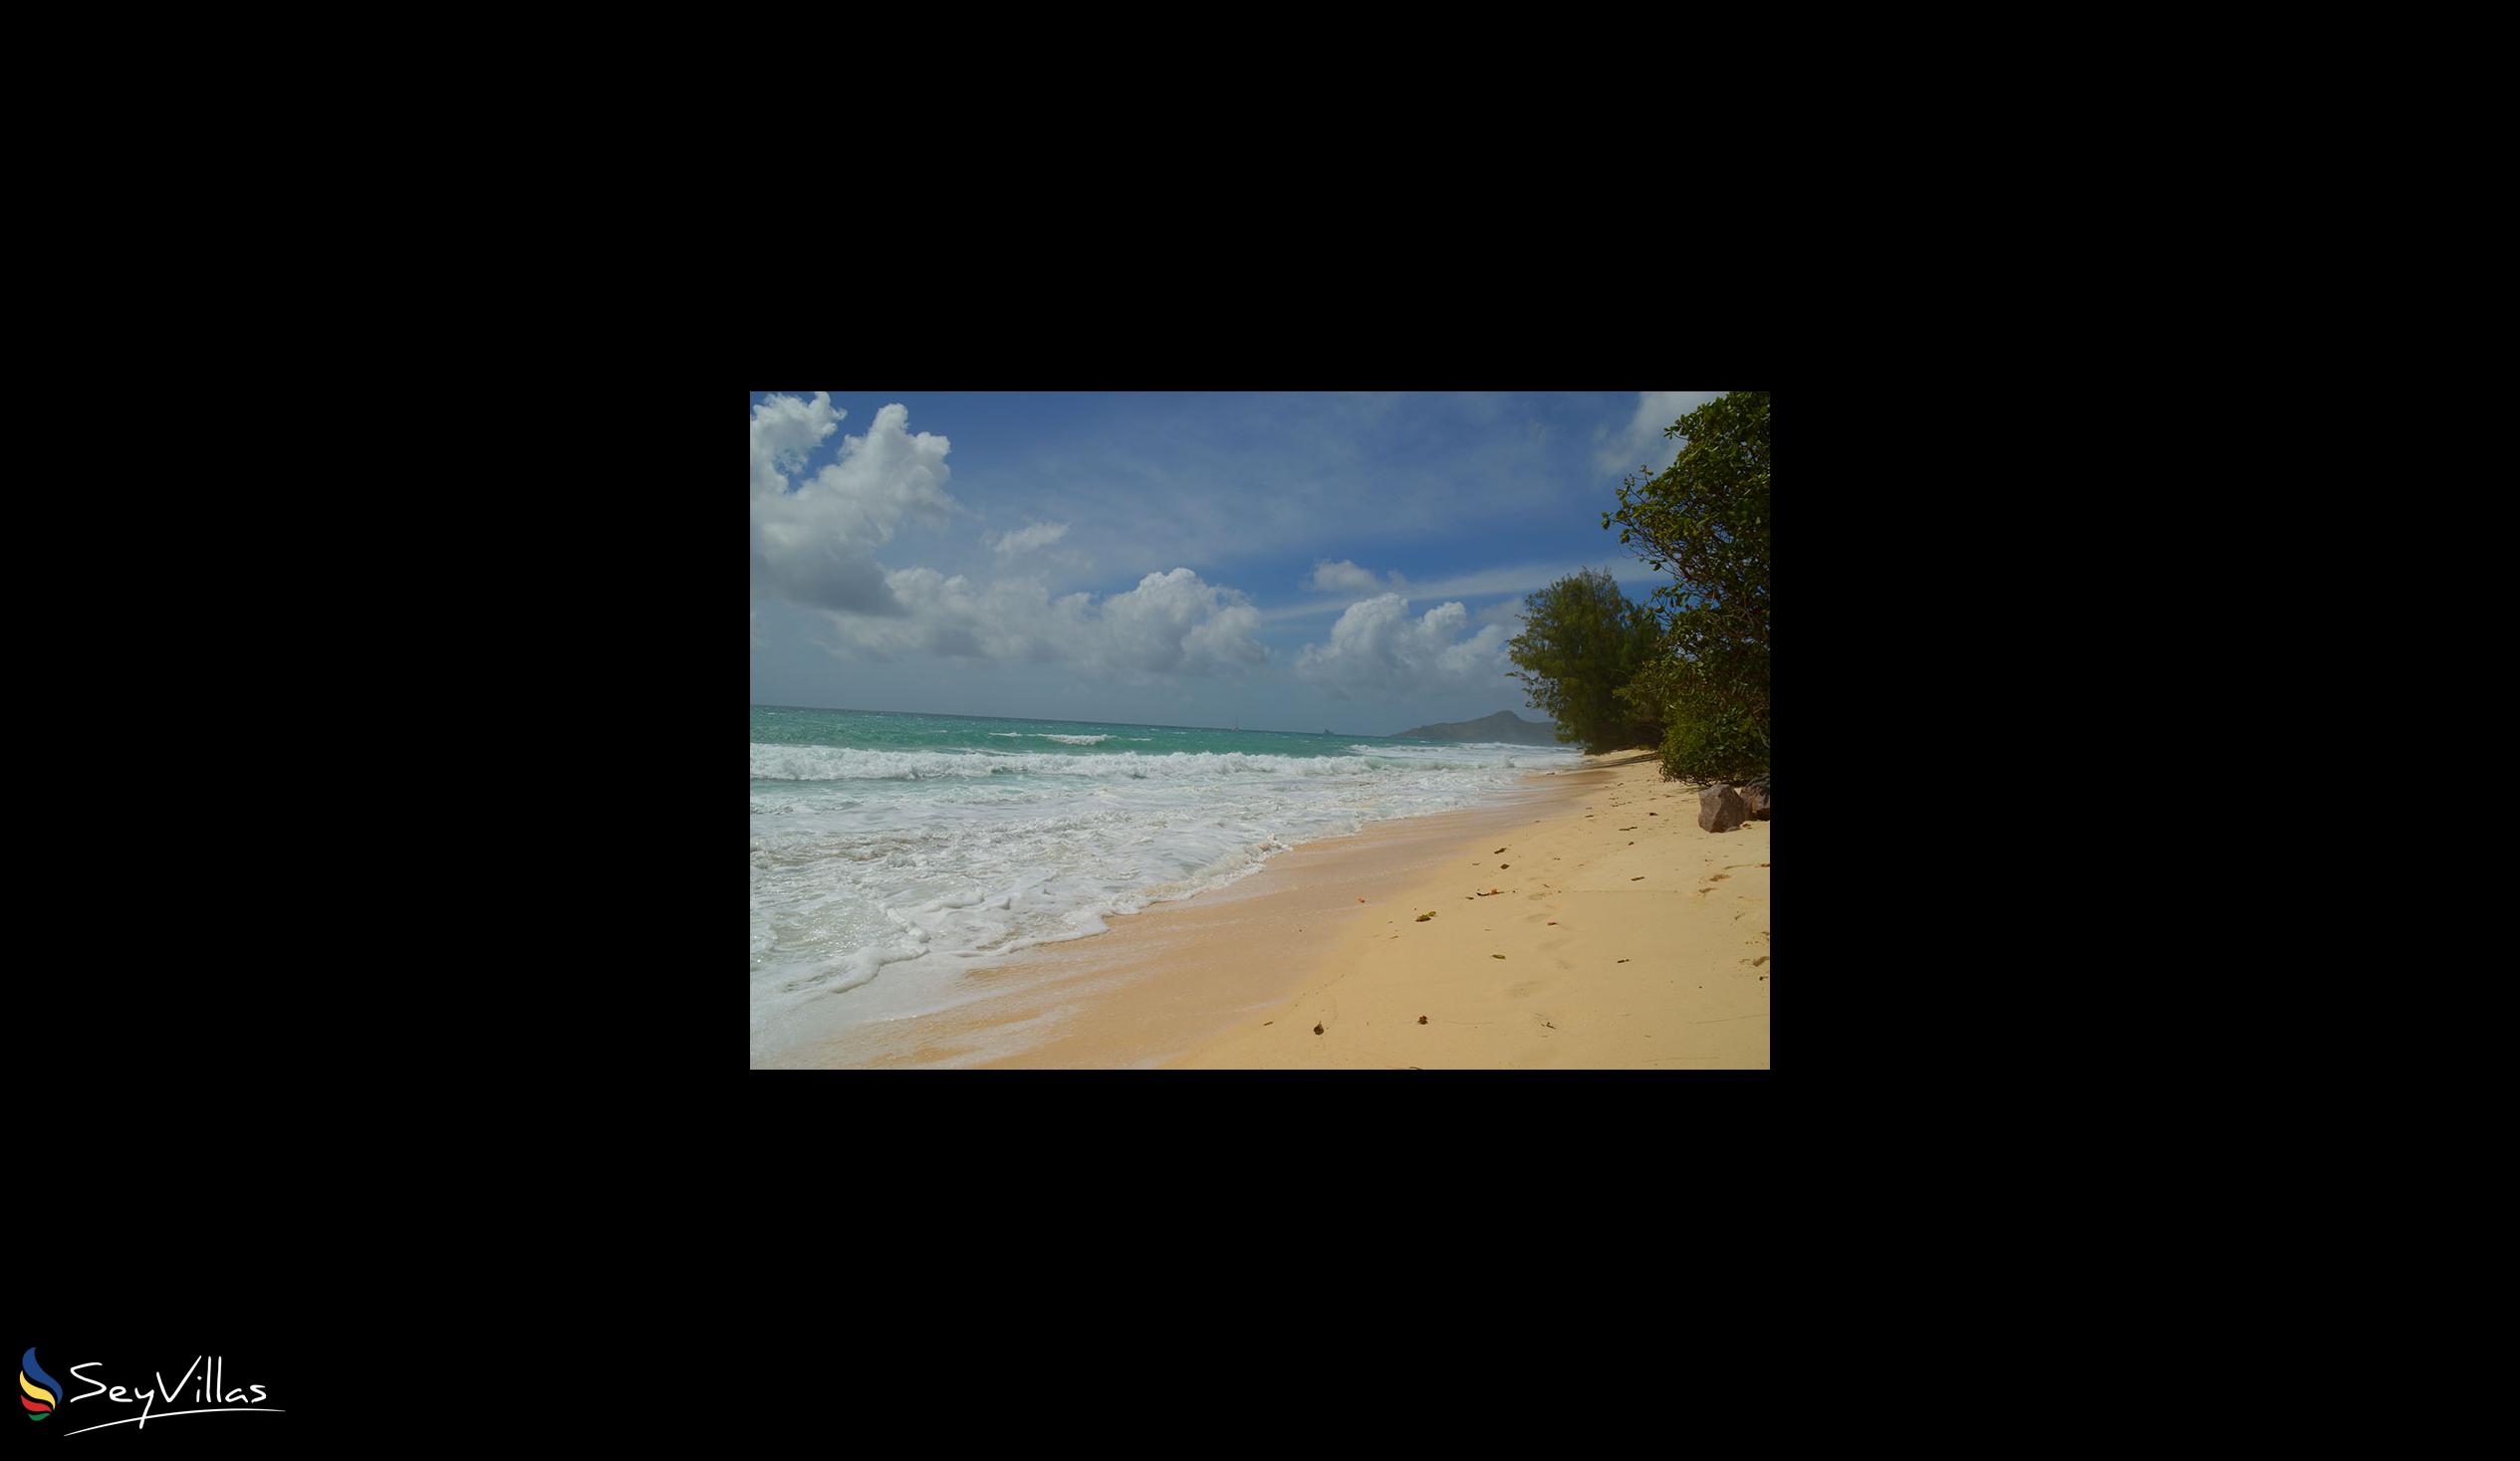 Photo 42: Villa Koket - Beaches - Mahé (Seychelles)